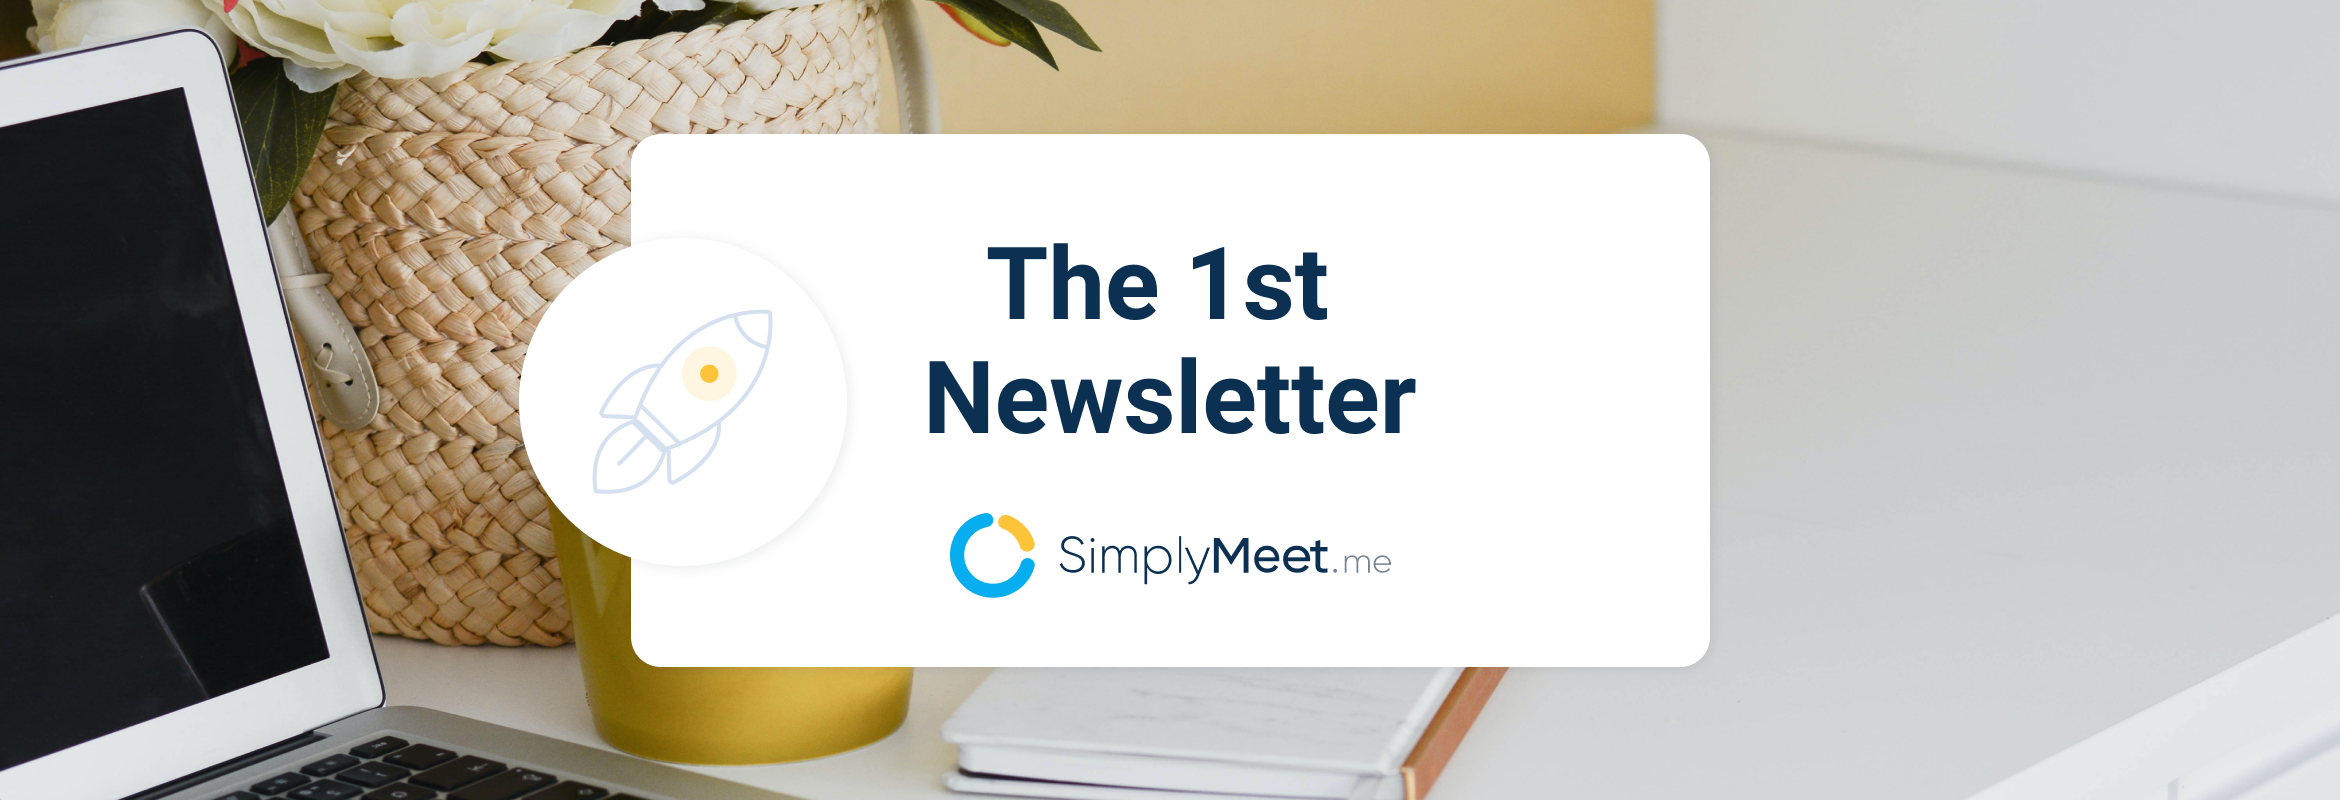 first newsletter from SimplyMeet.me